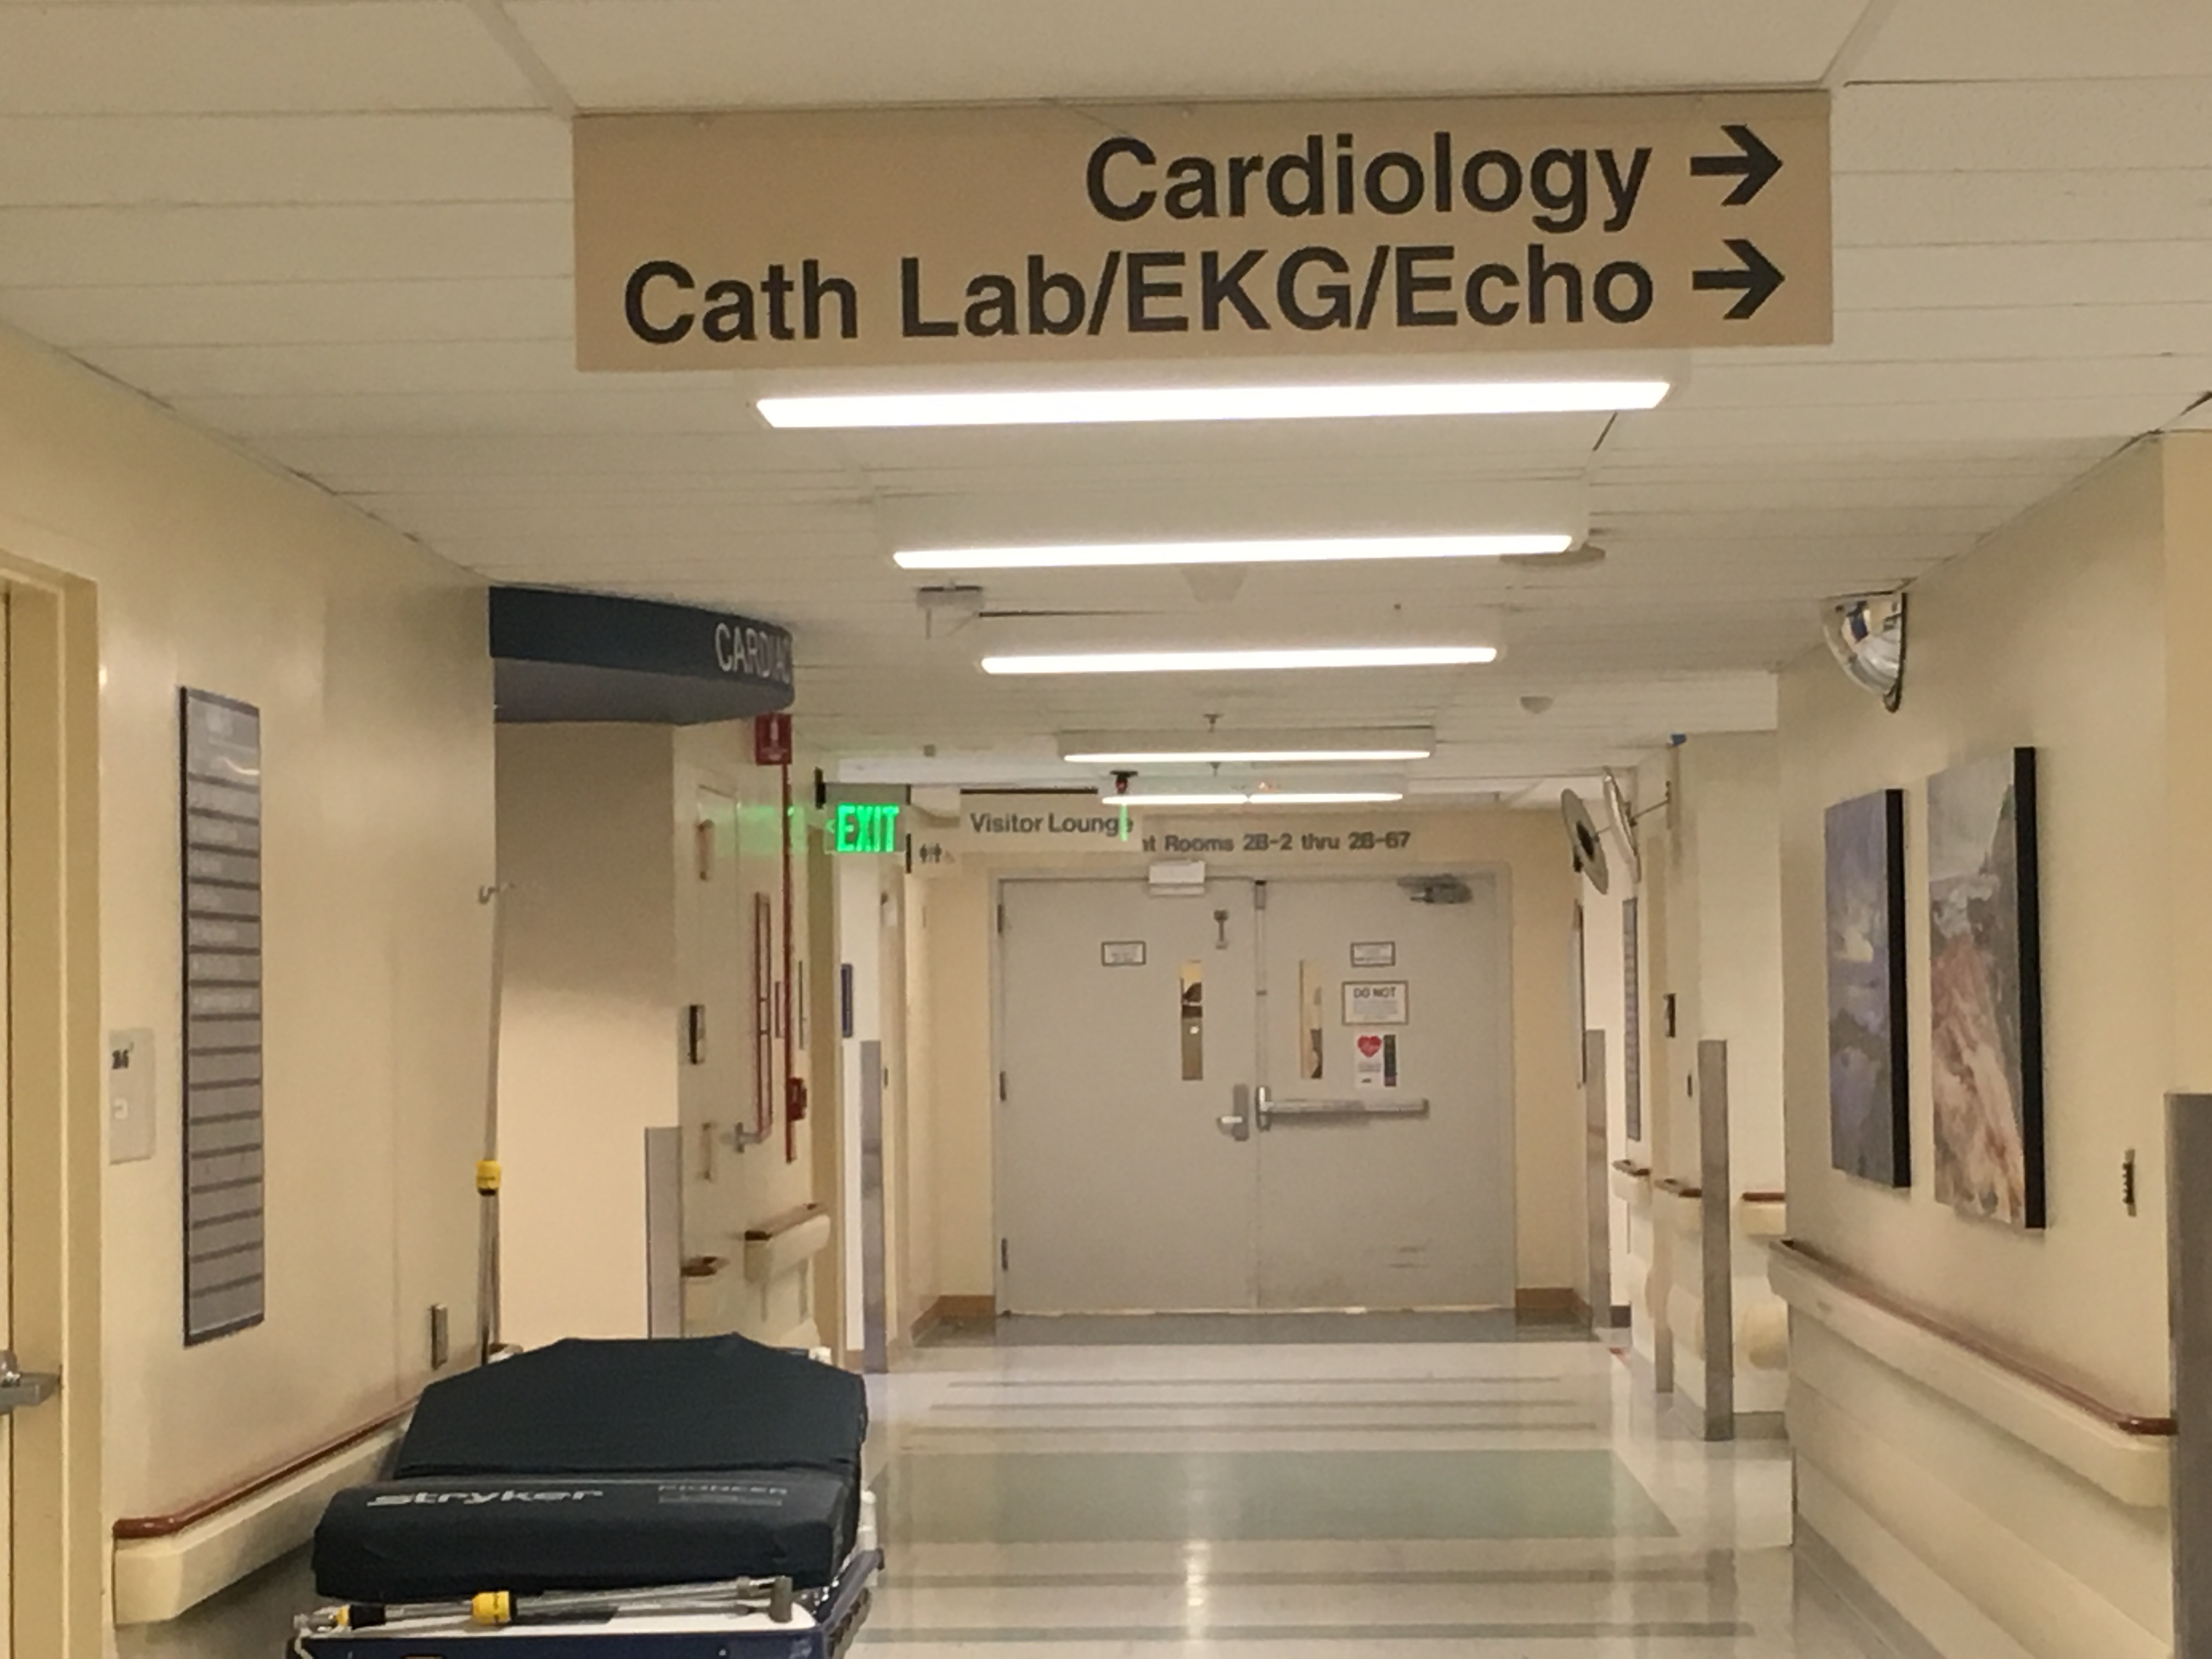 Cardiology hallway